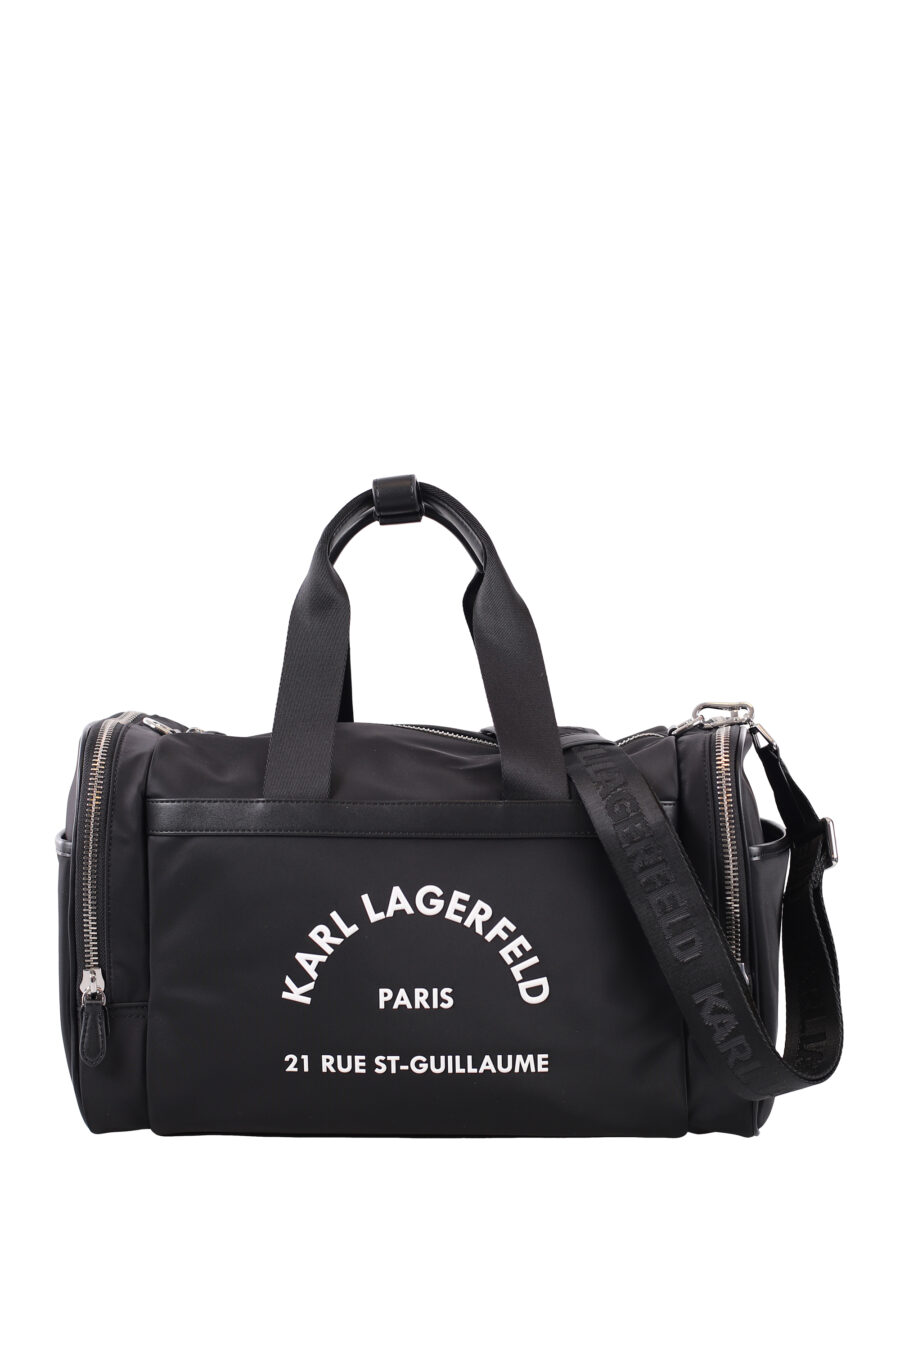 Black travel bag with "rue st-guillaume" logo - IMG 1630